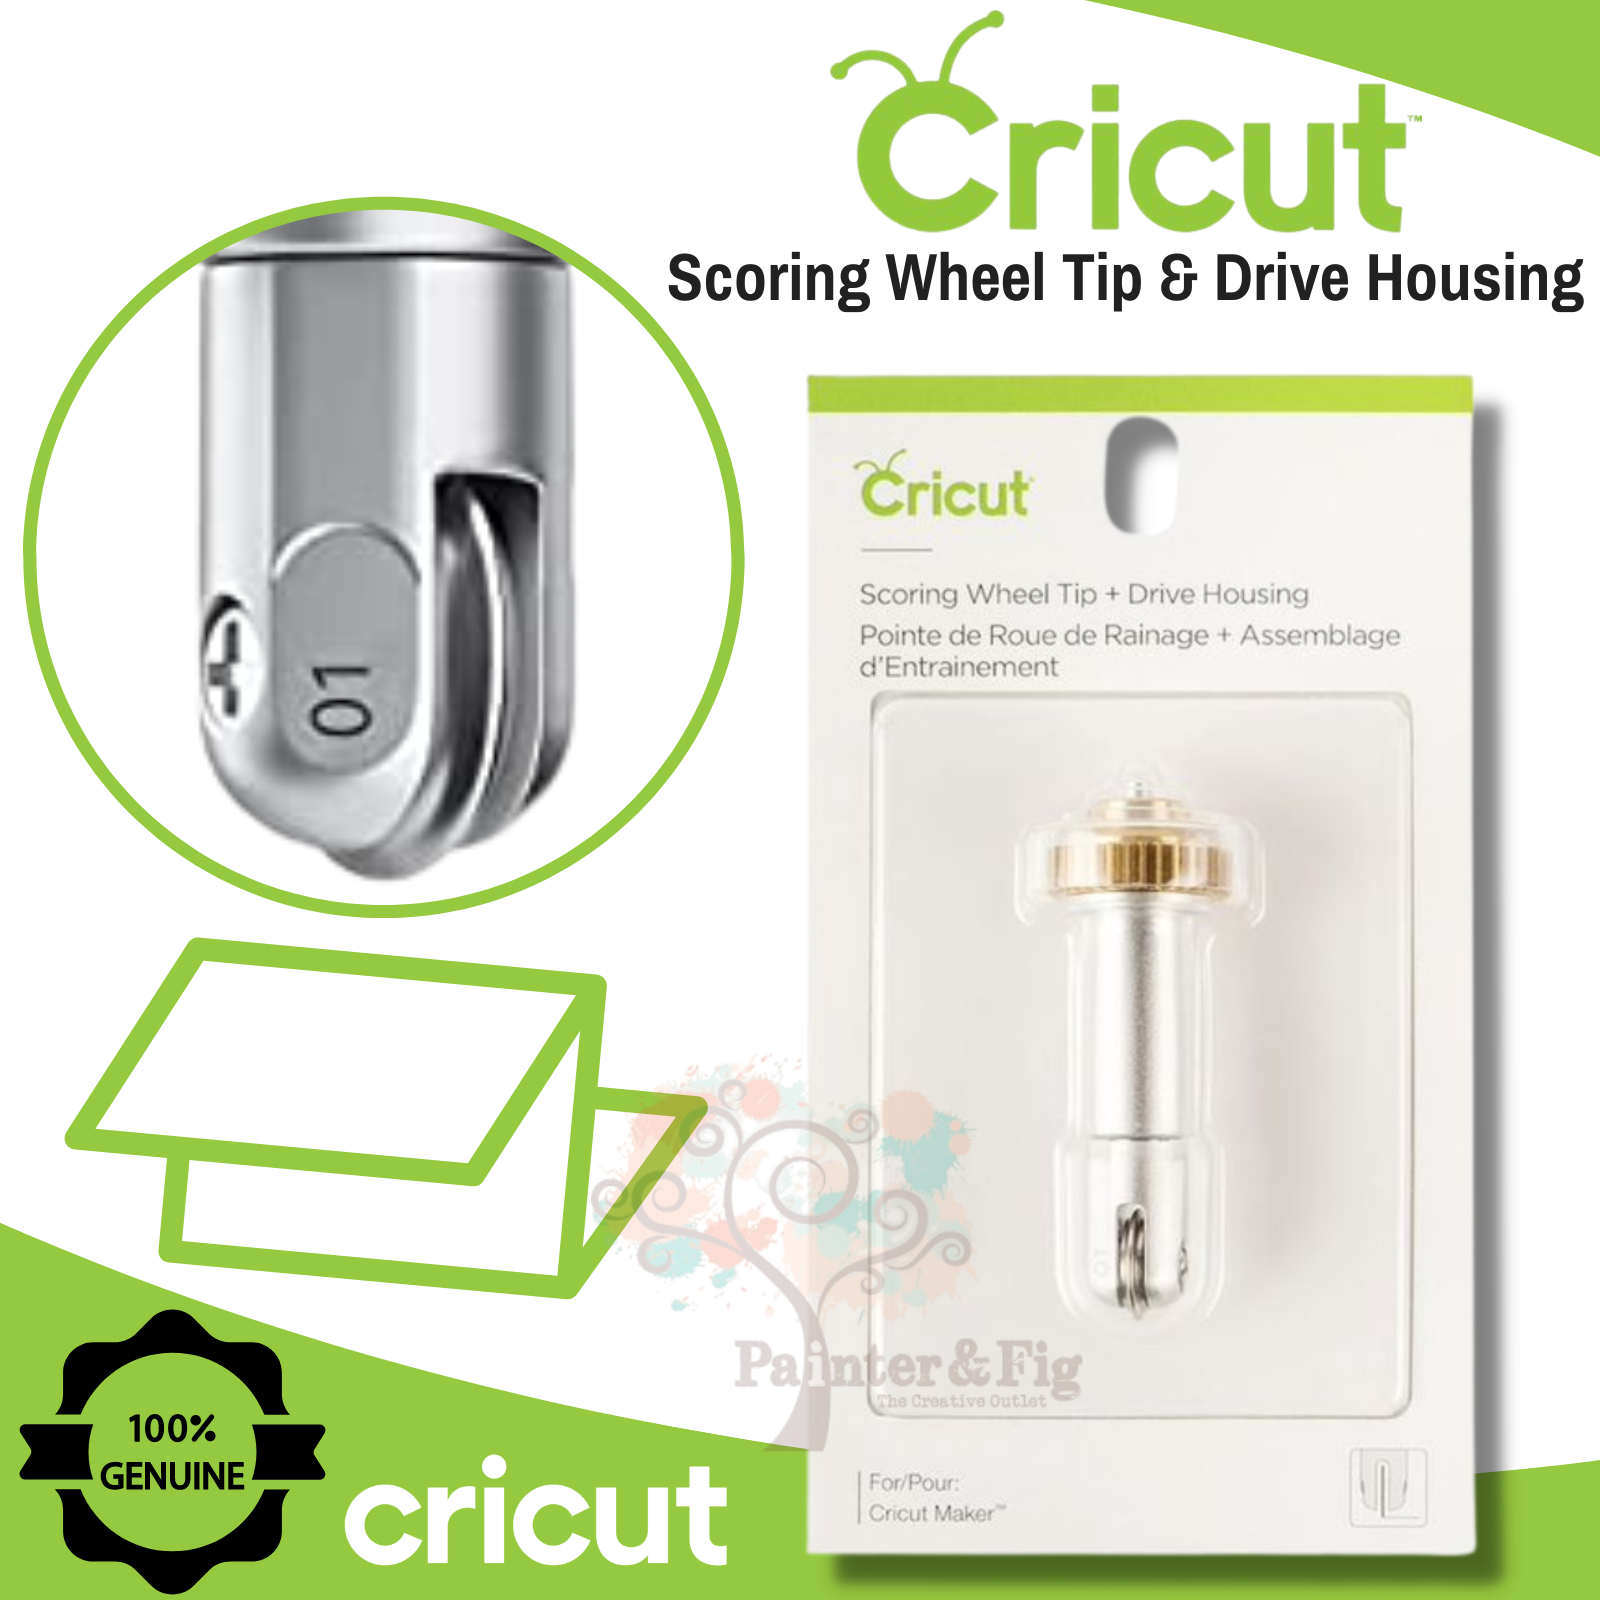 Cricut Scoring Wheel Tip Drive Housing 